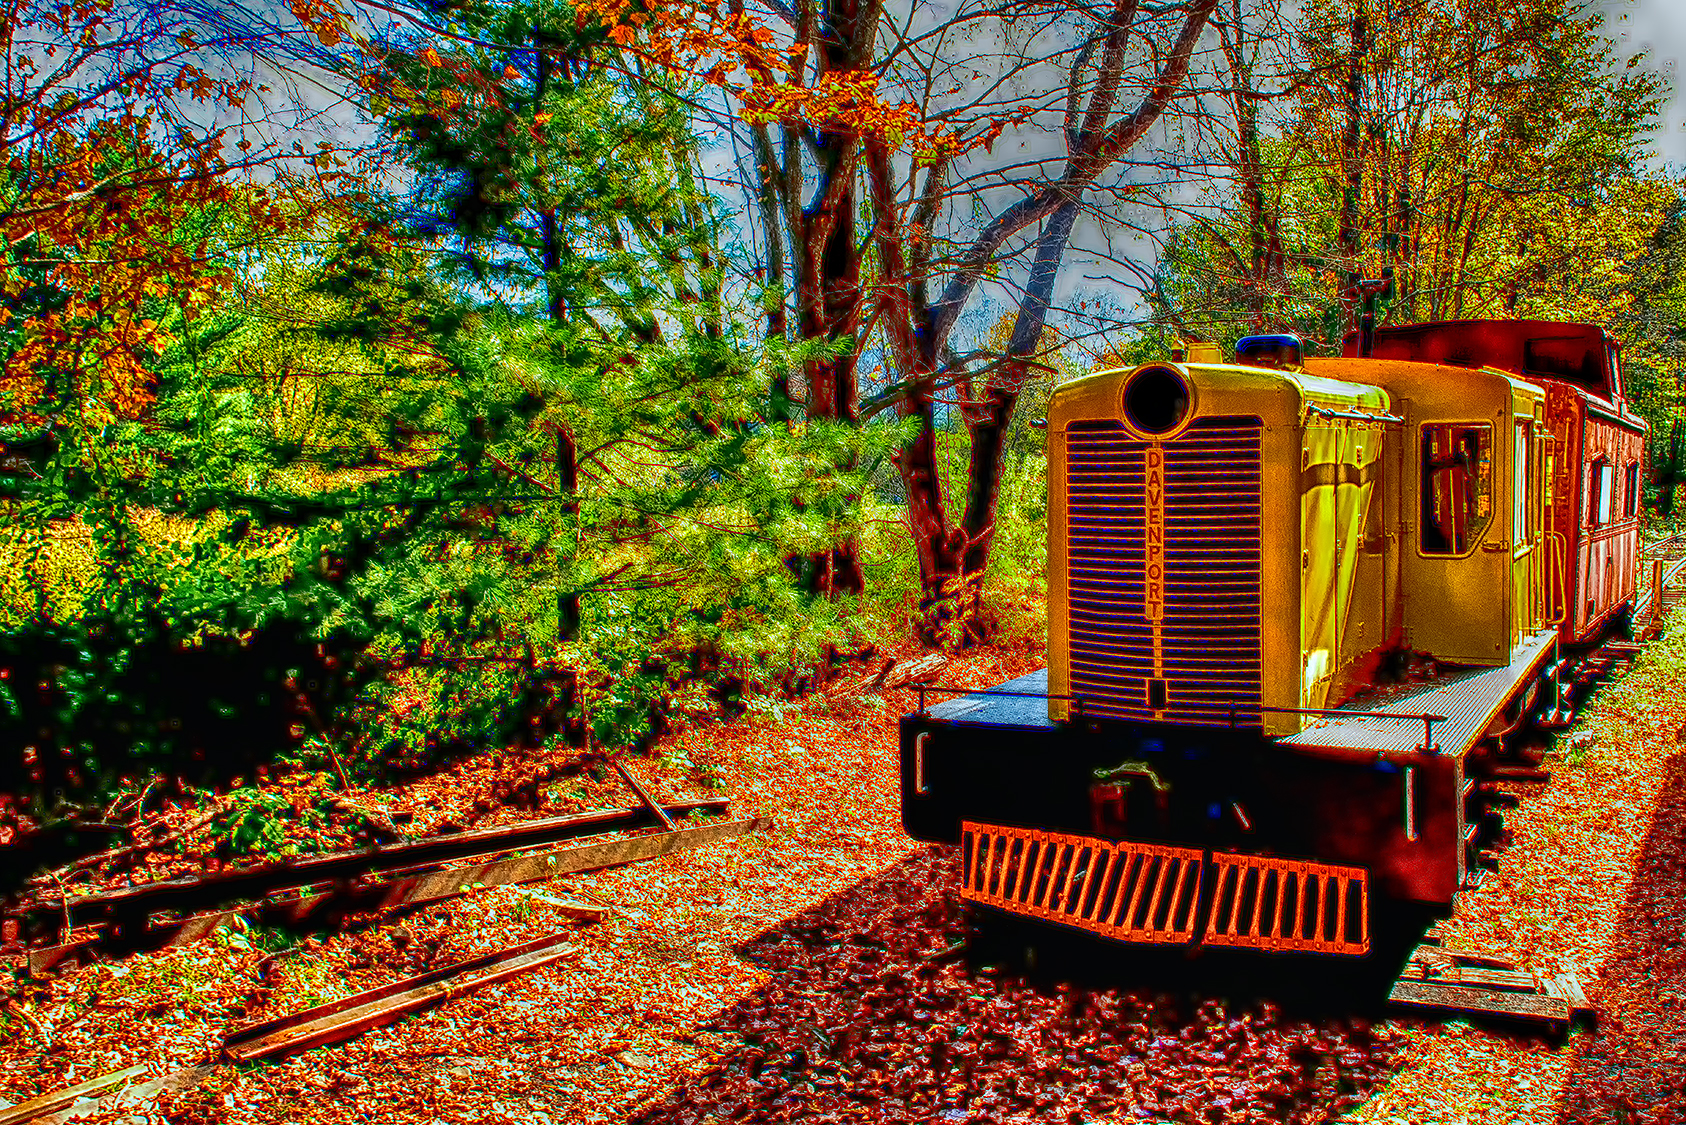 1310_0110a.jpg - Catskill Mountain Railroad